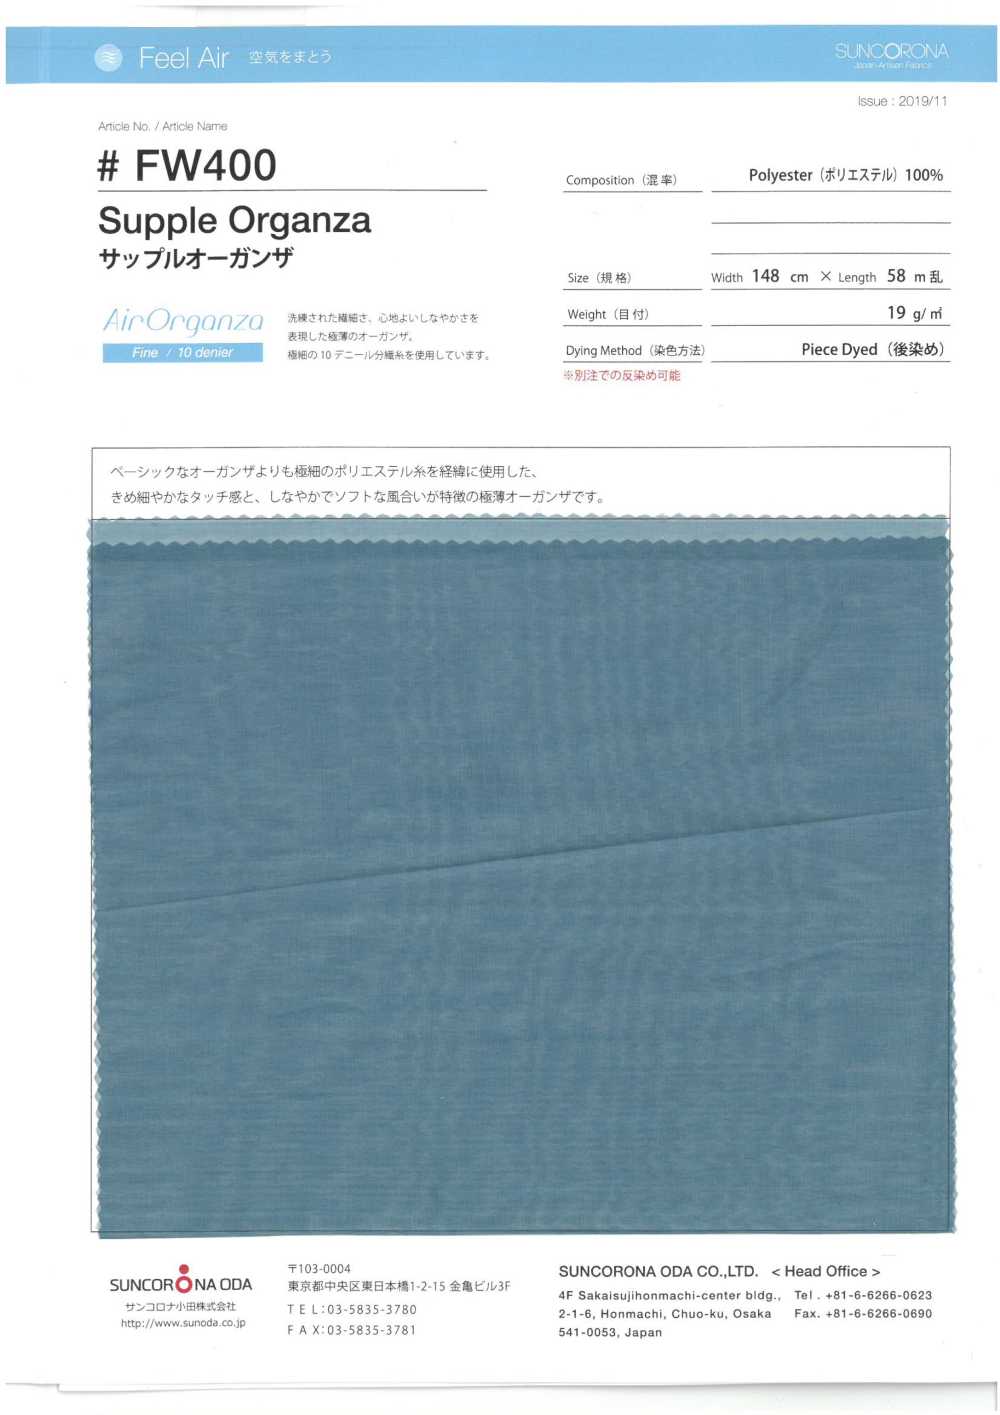 FW400 Organza De Muestra[Fabrica Textil] Suncorona Oda